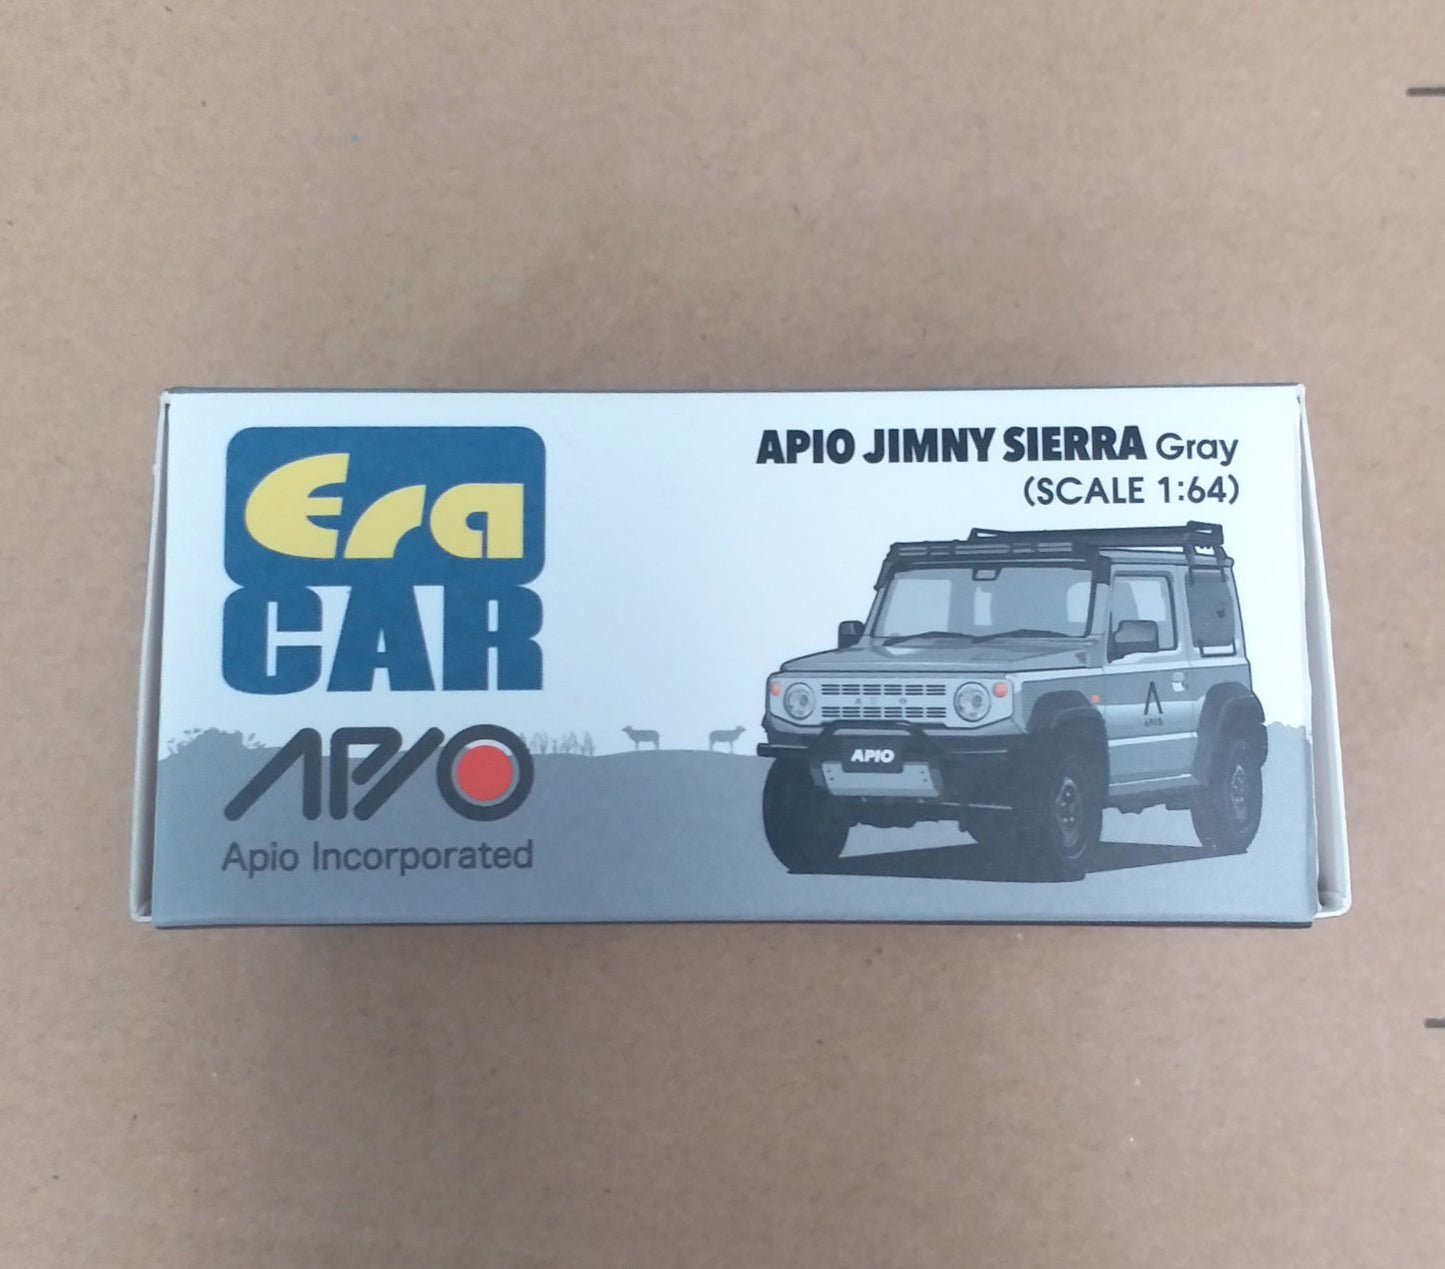 Era Car Apio Jimny Sierra (Gray)